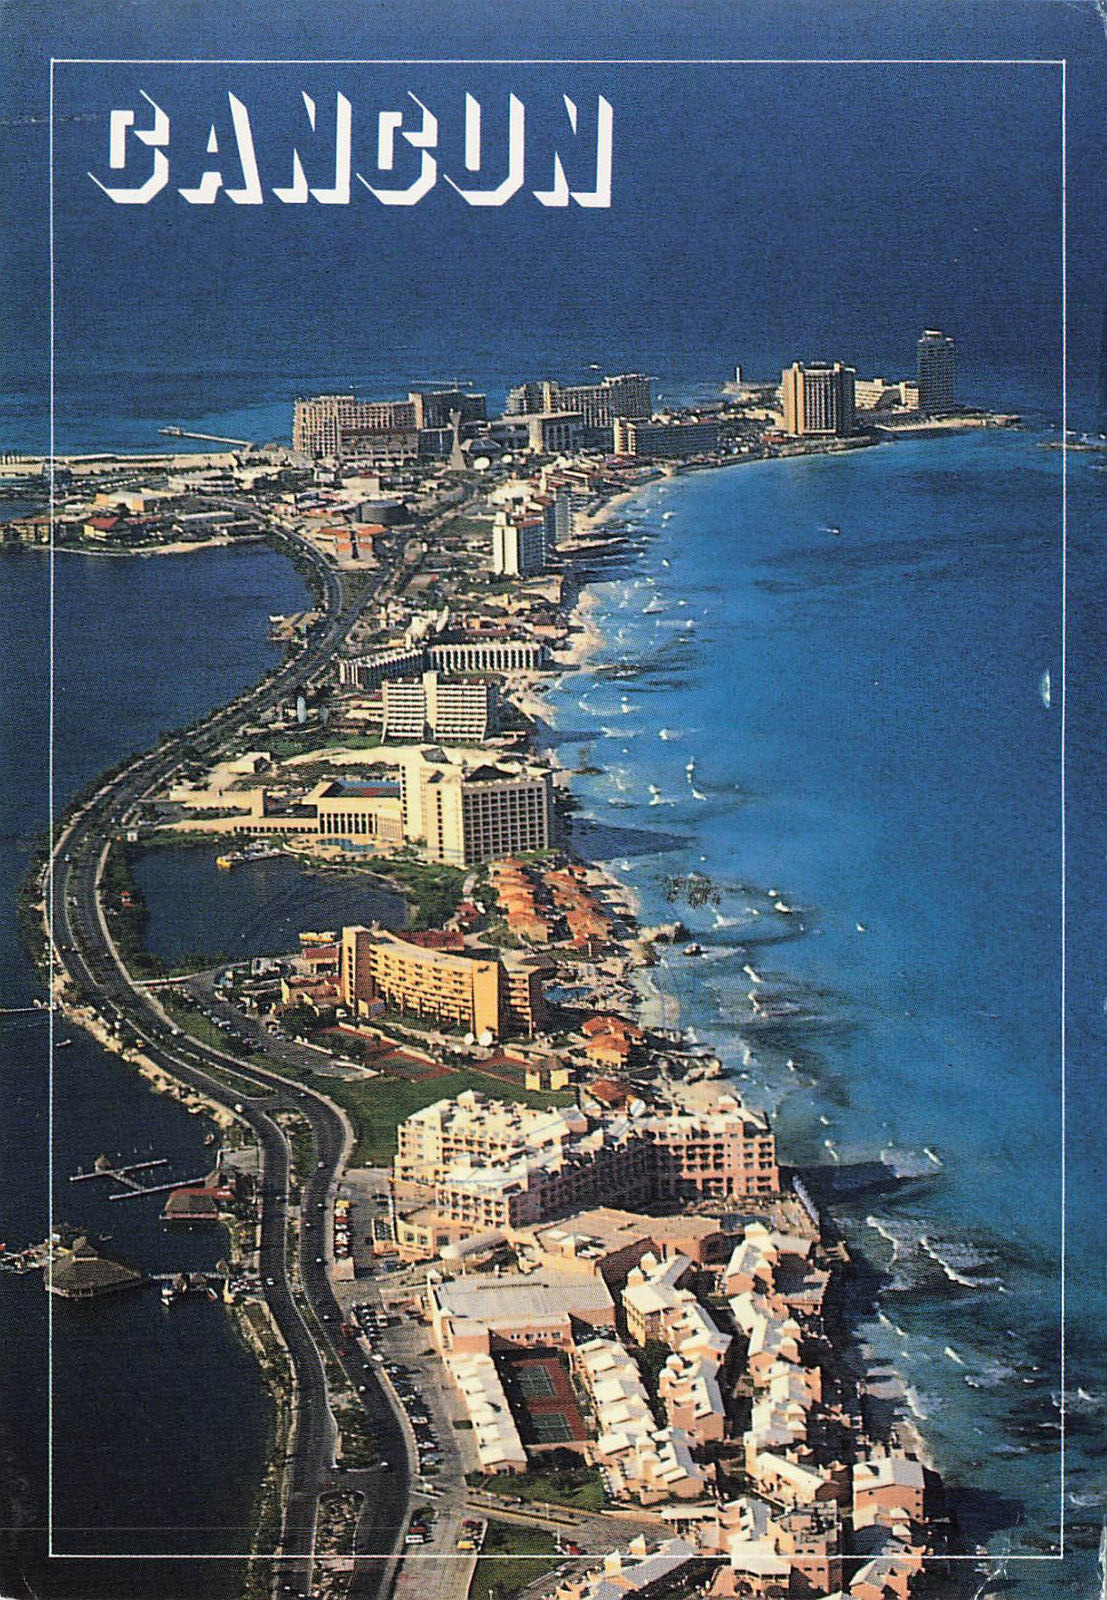 Continental Postcard Cancun Mexico